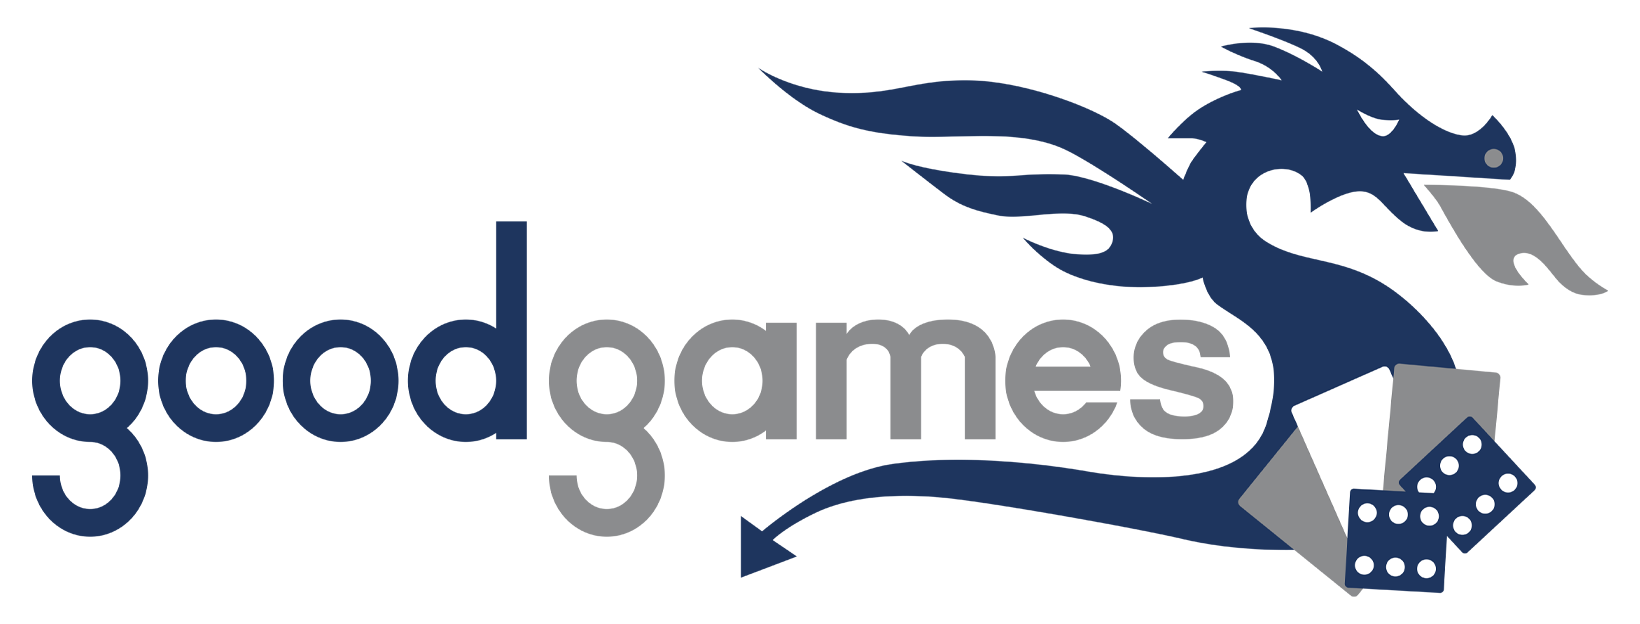 Good Games logo